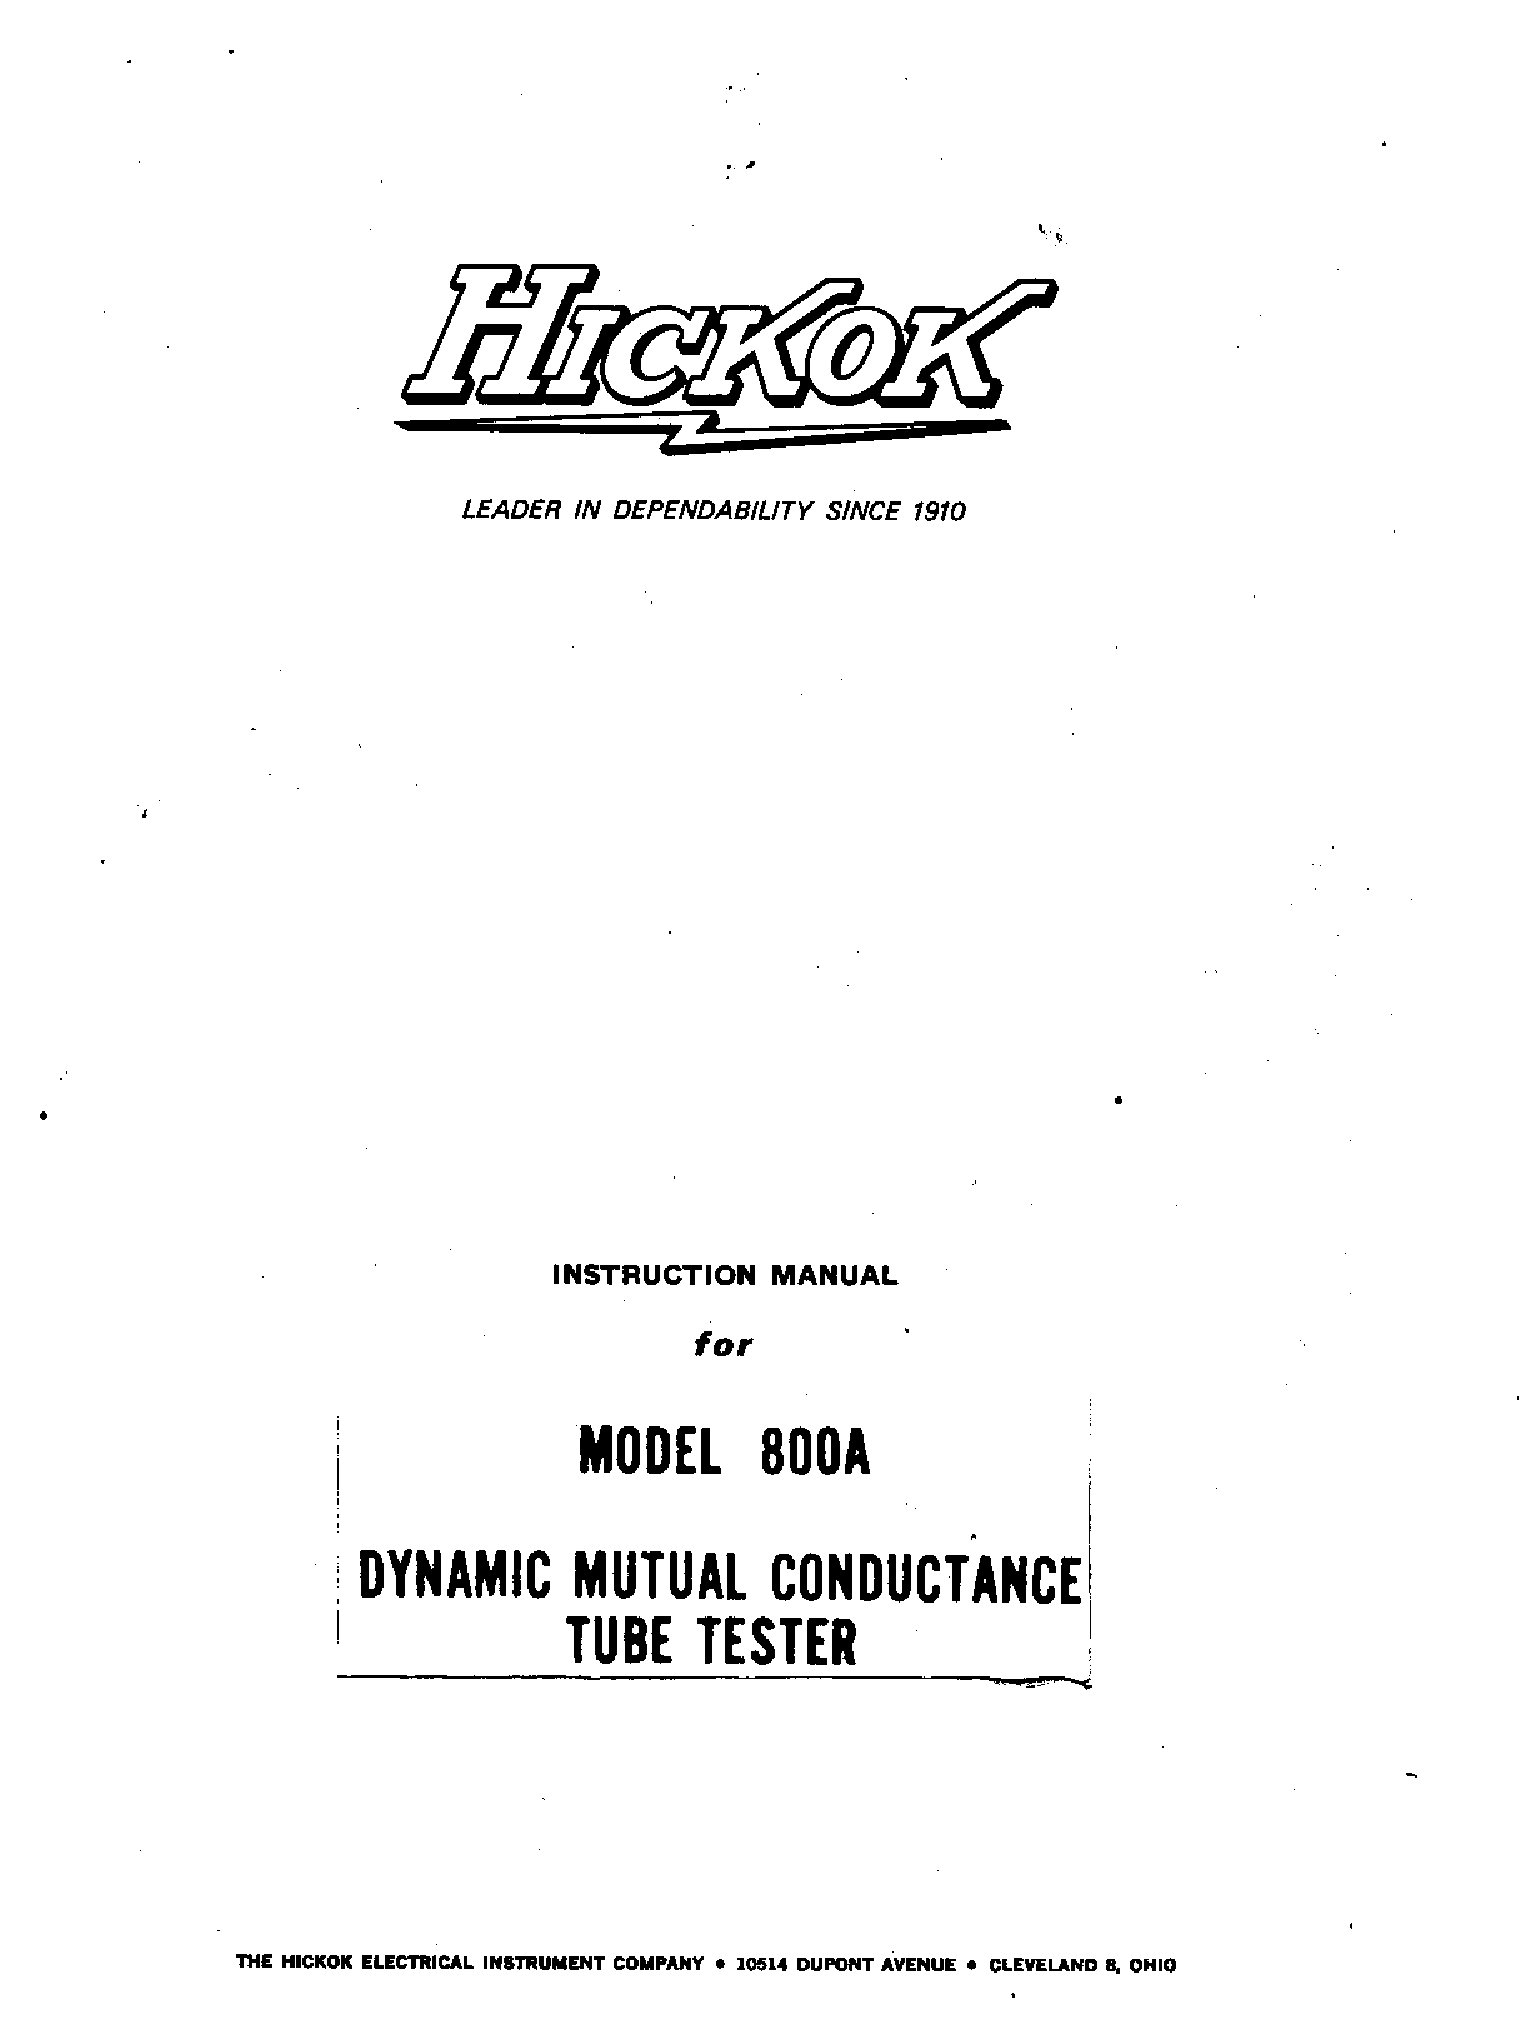 Hickok 870 Instruction manual 